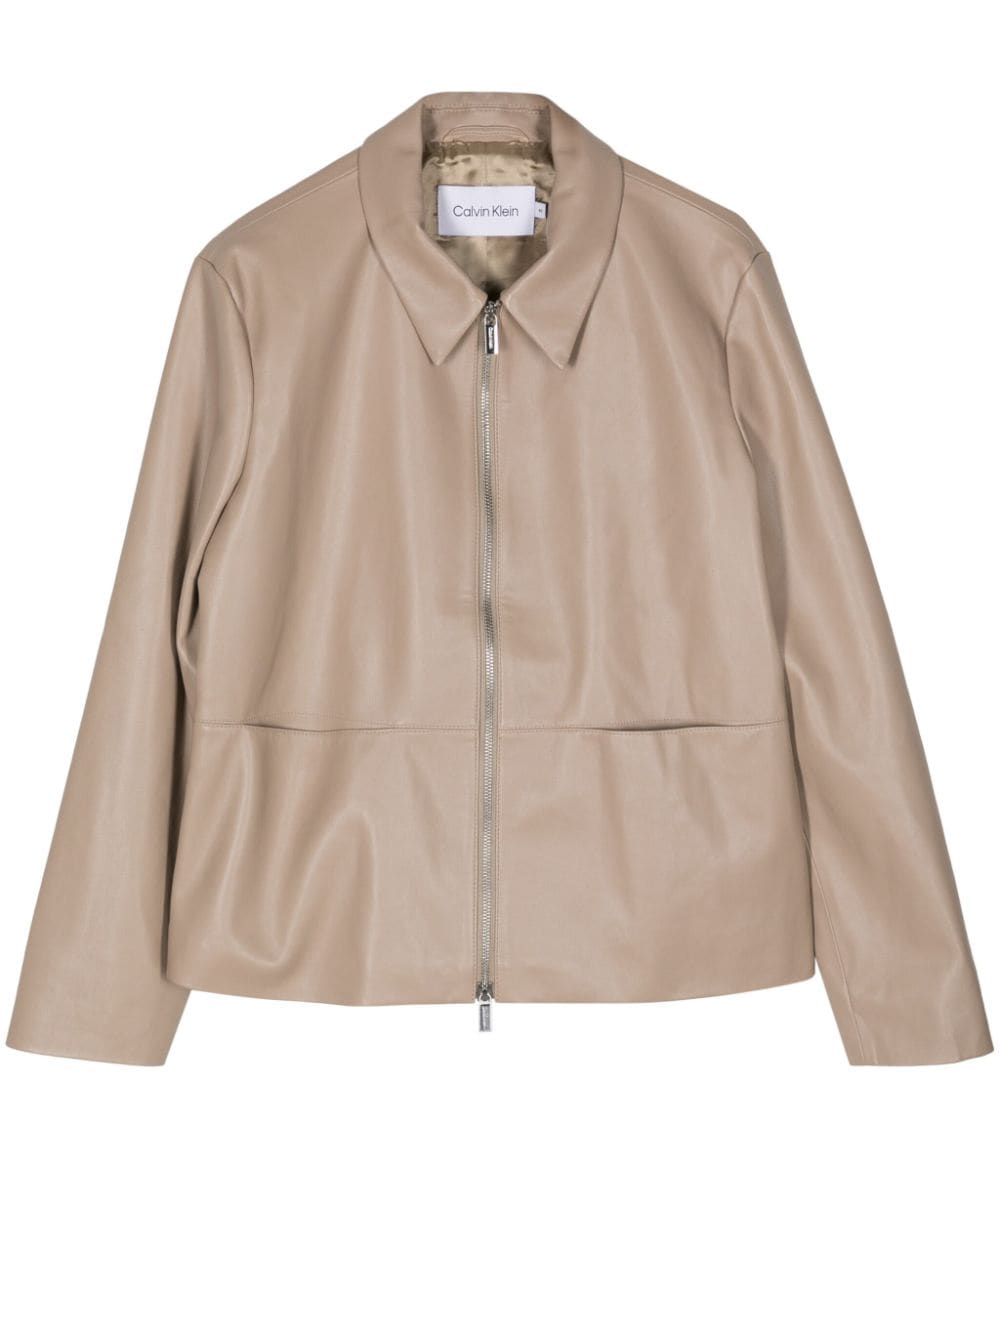 Calvin Klein regenerated-leather zip-up jacket - Nude